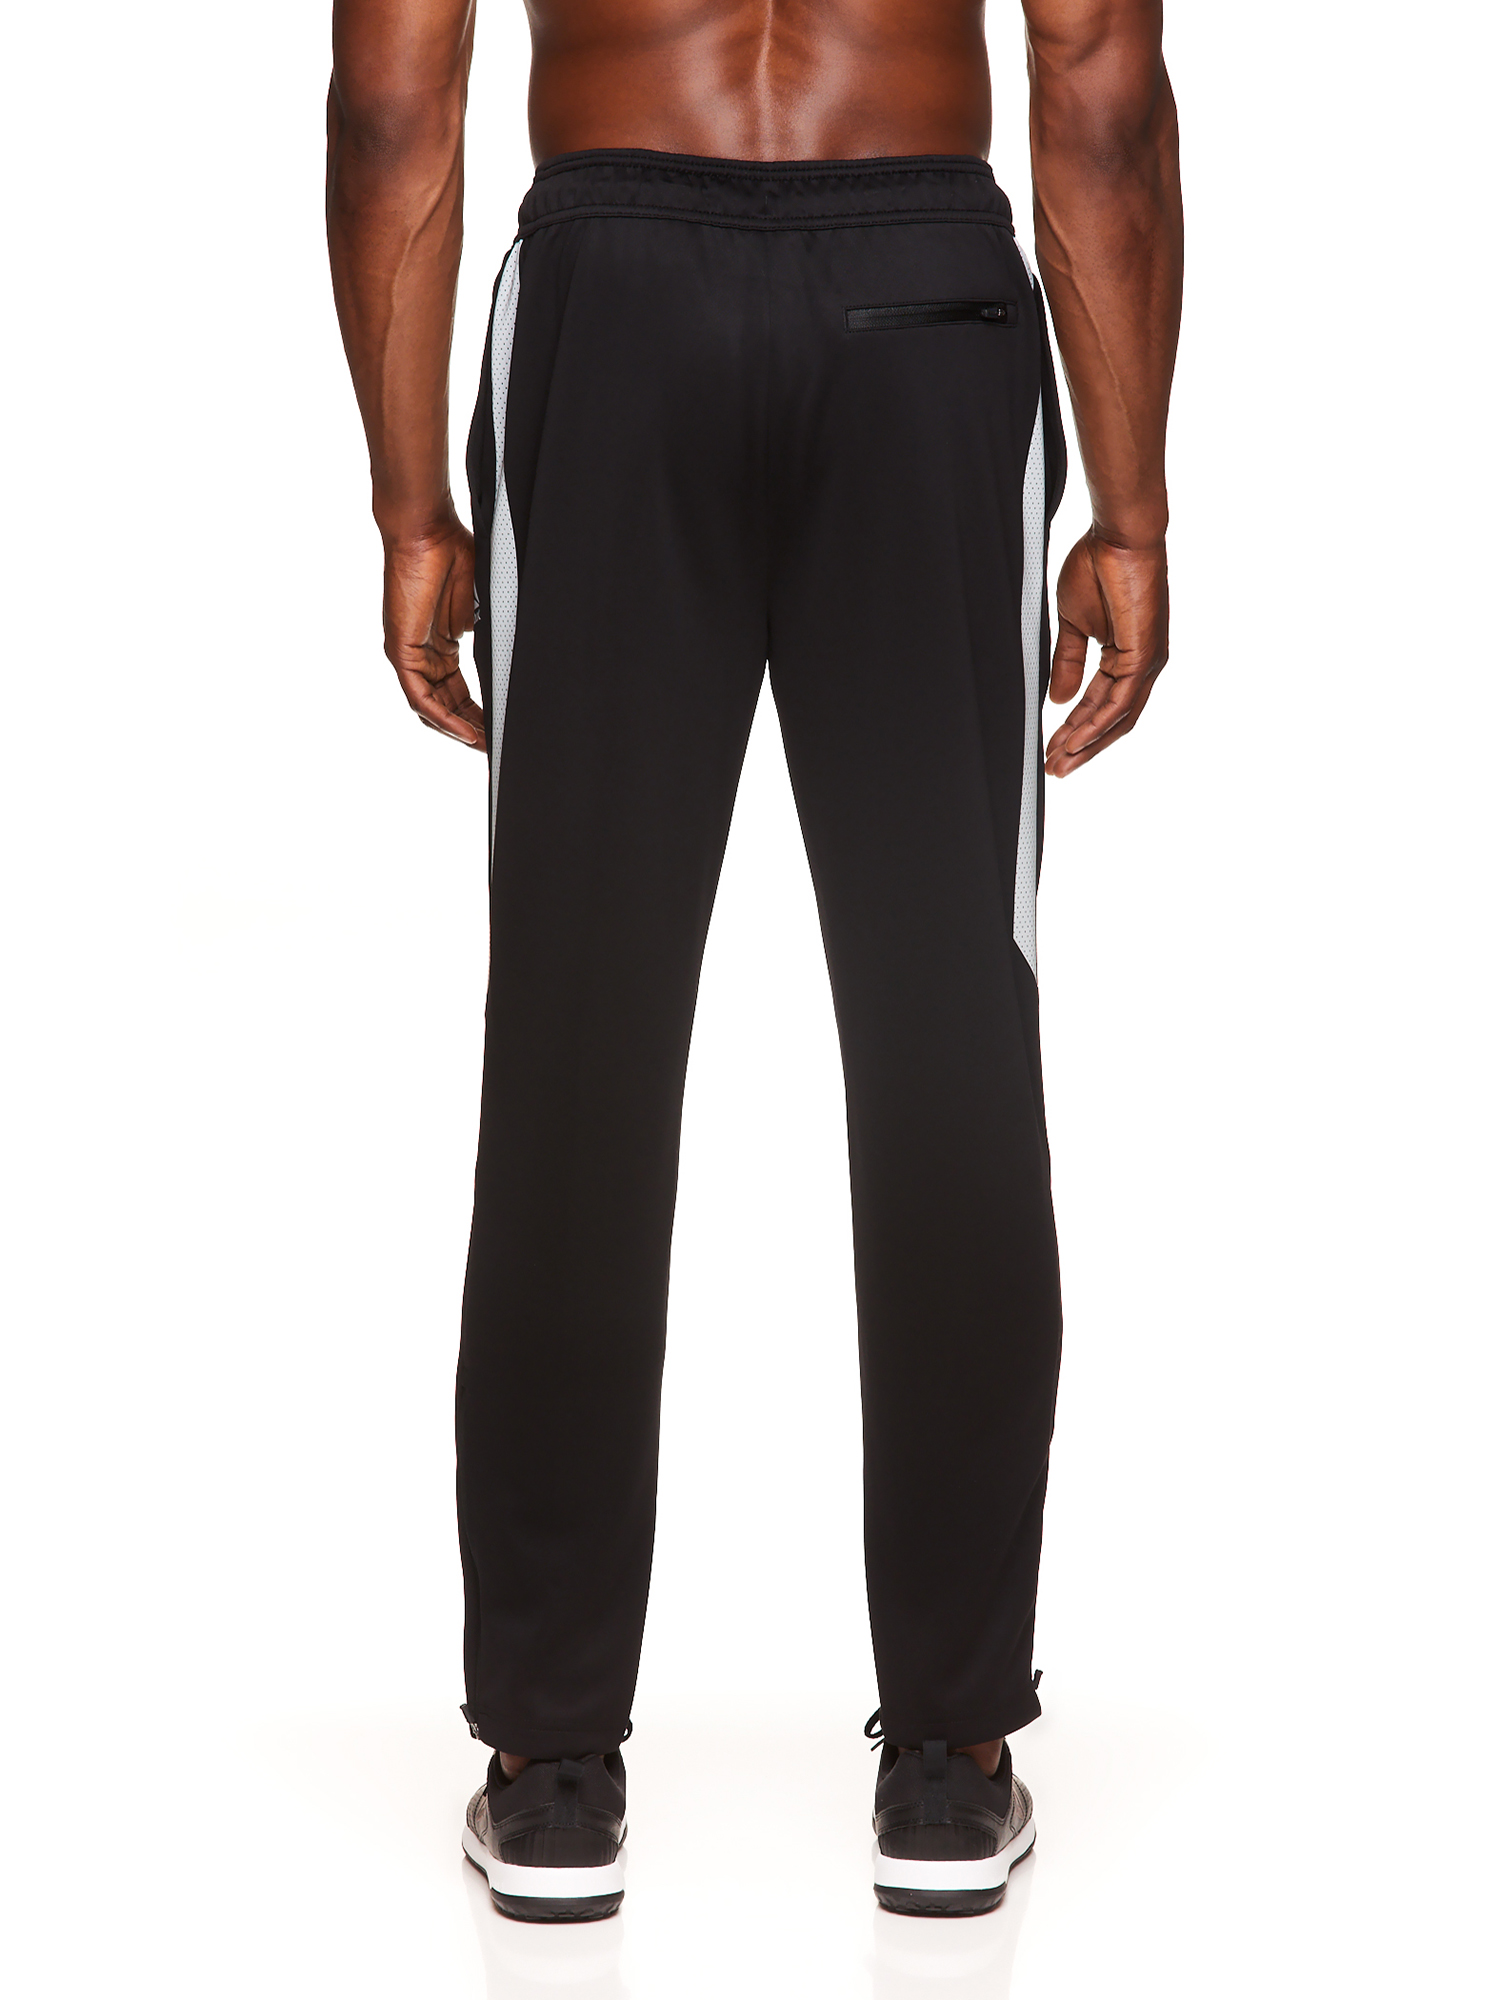 Reebok Men's and Big Men's Active Interlock Pants, up to Size 3XL - image 2 of 4